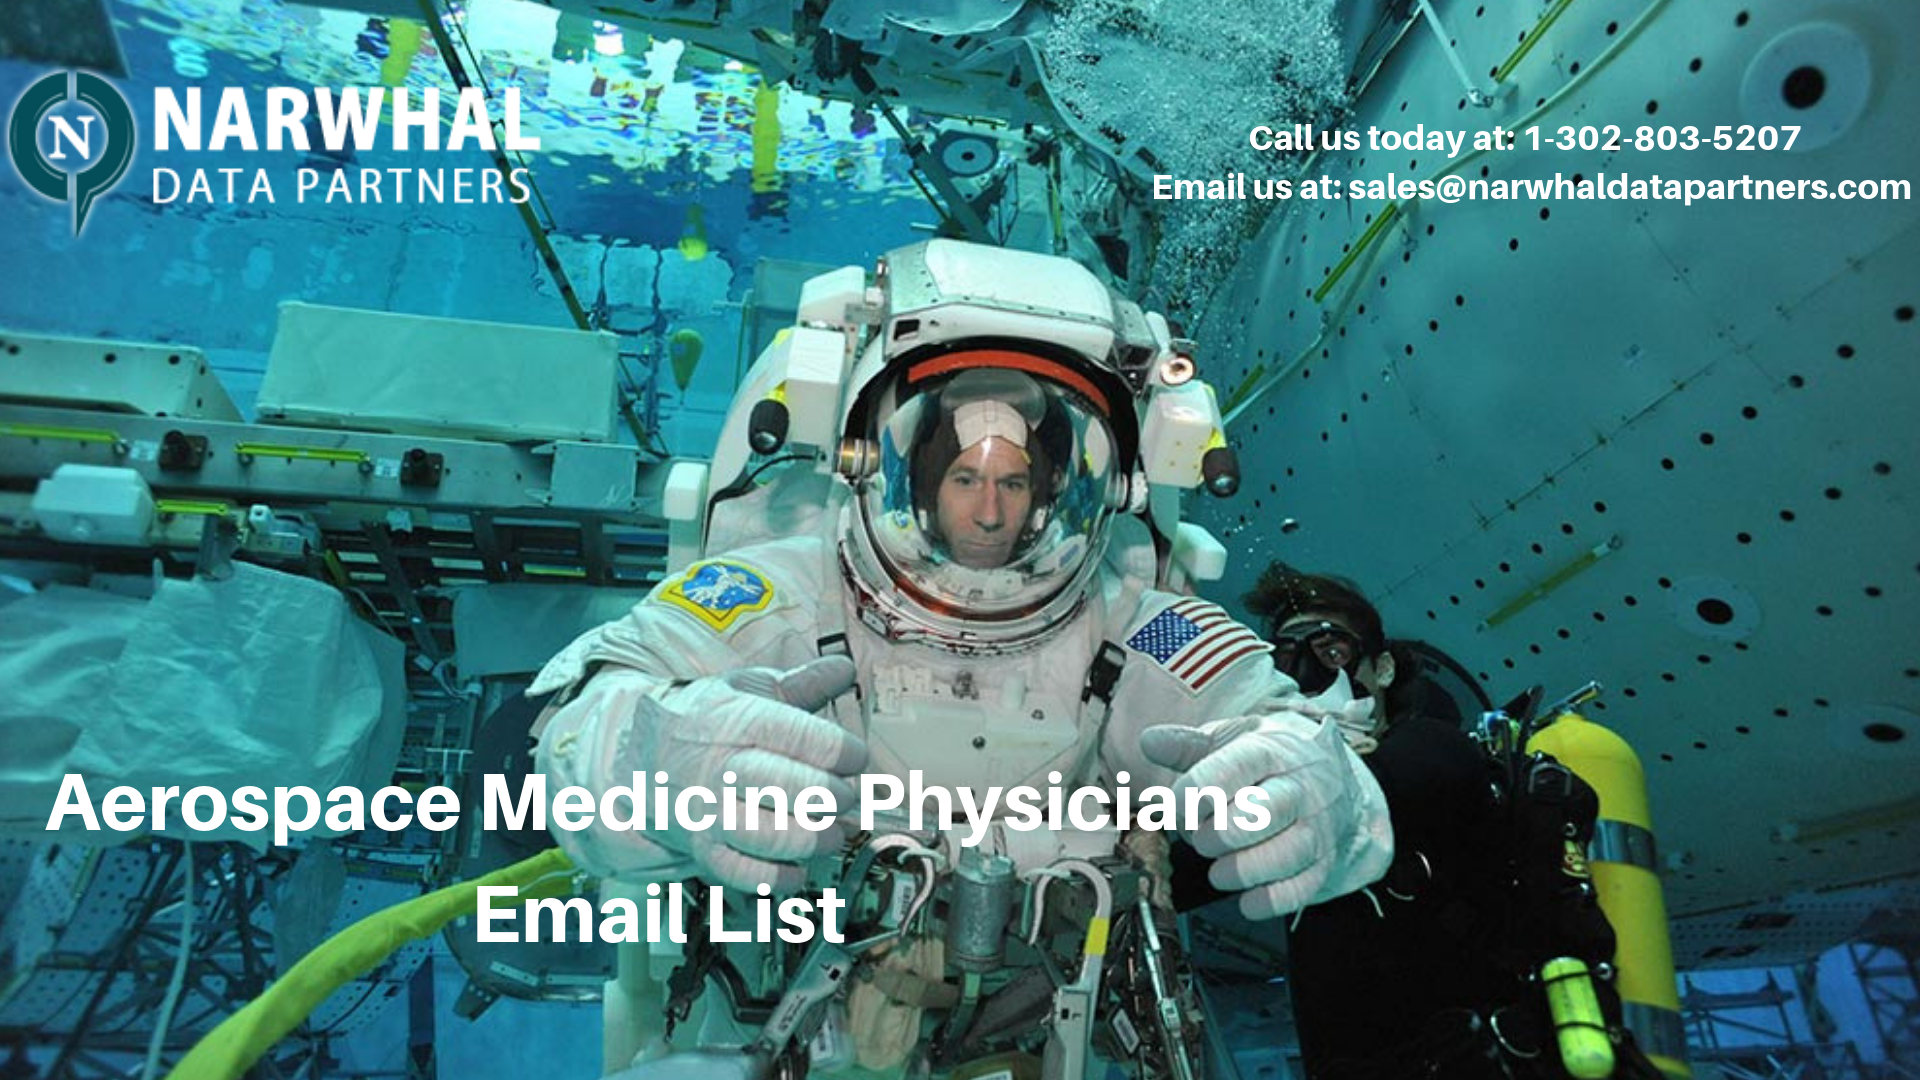 http://narwhaldatapartners.com/aerospace-medicine-physicians-email-list.html